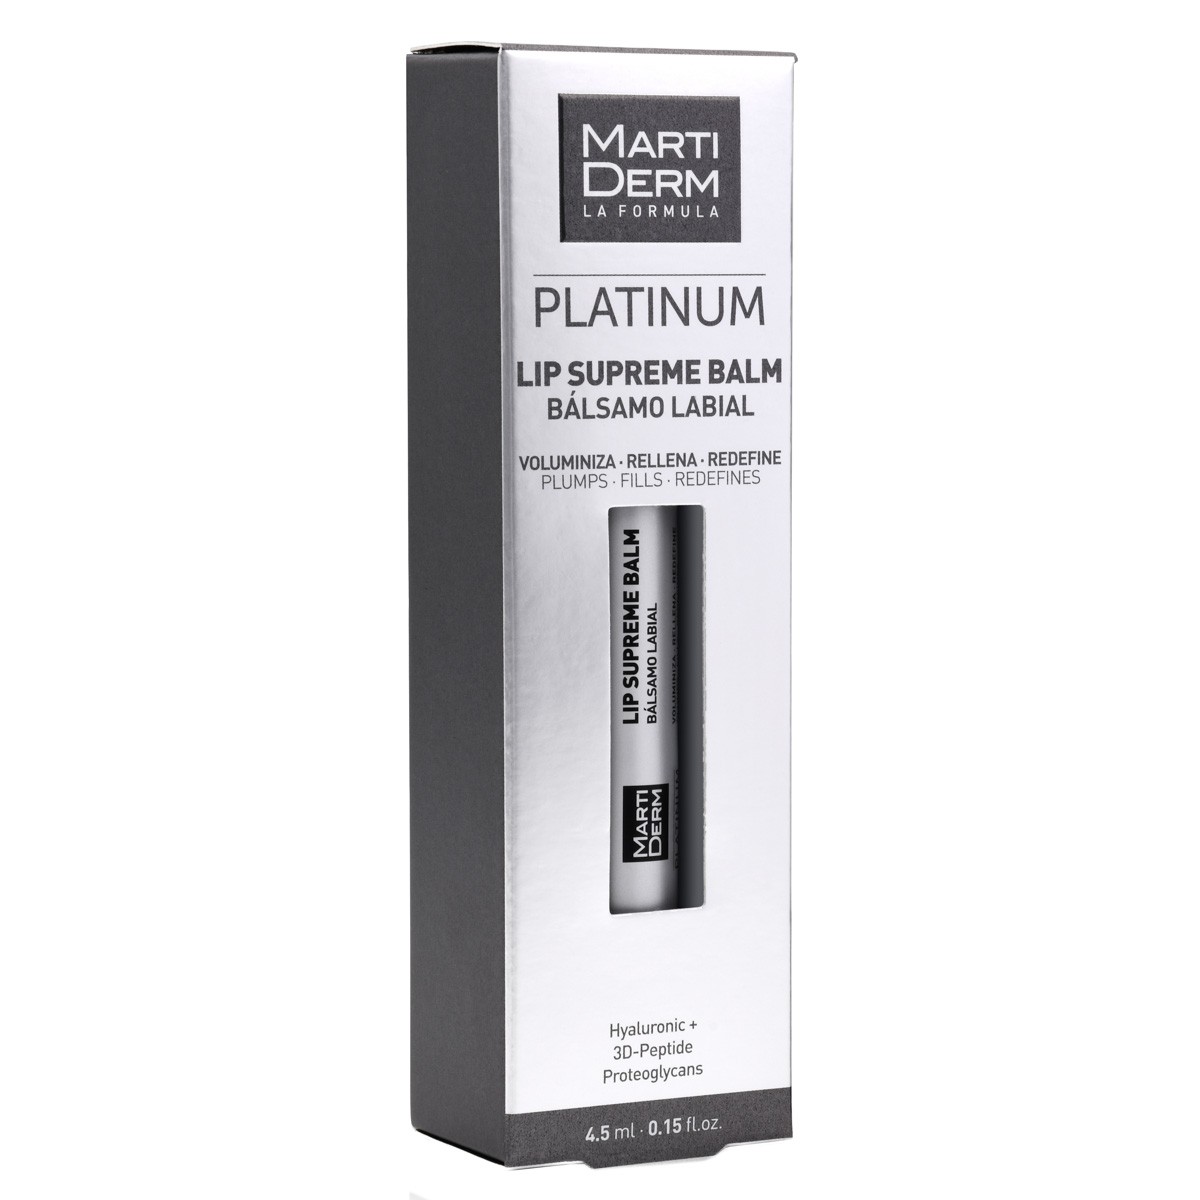 MartiDerm Platinum Lip Supreme Balm 4,5 ml